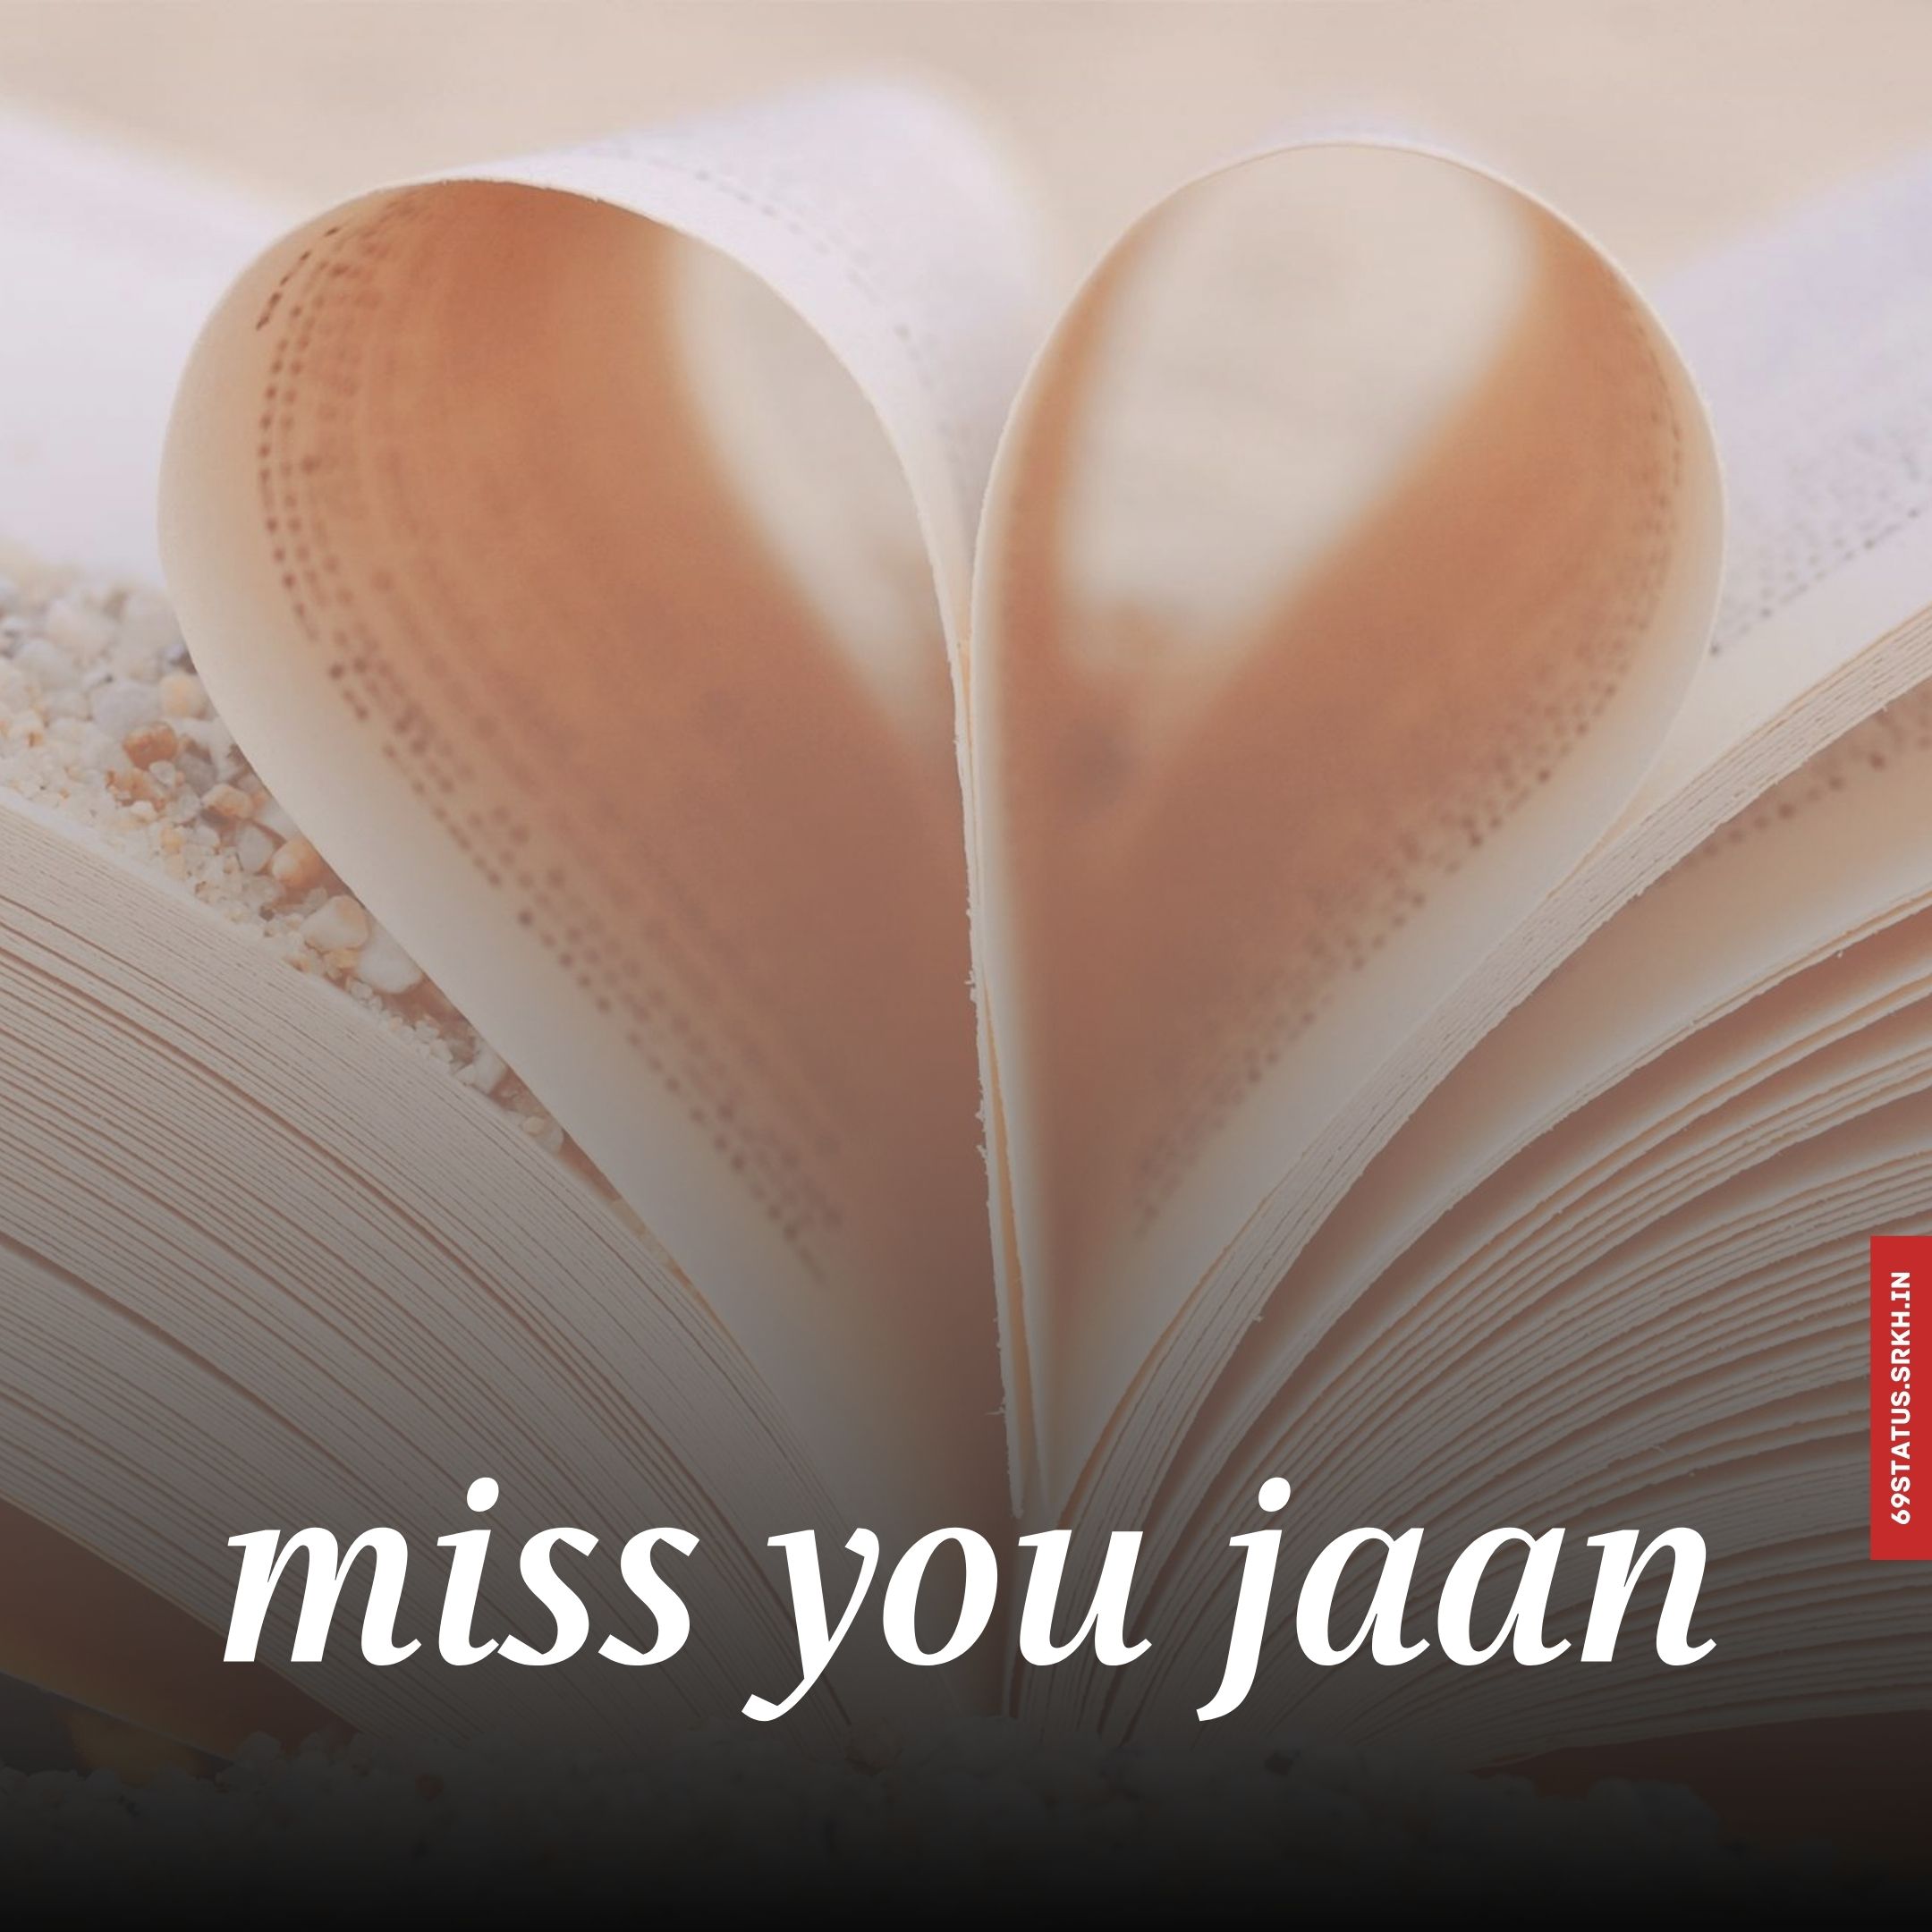 🔥 I miss you jaan image Download free - Images SRkh